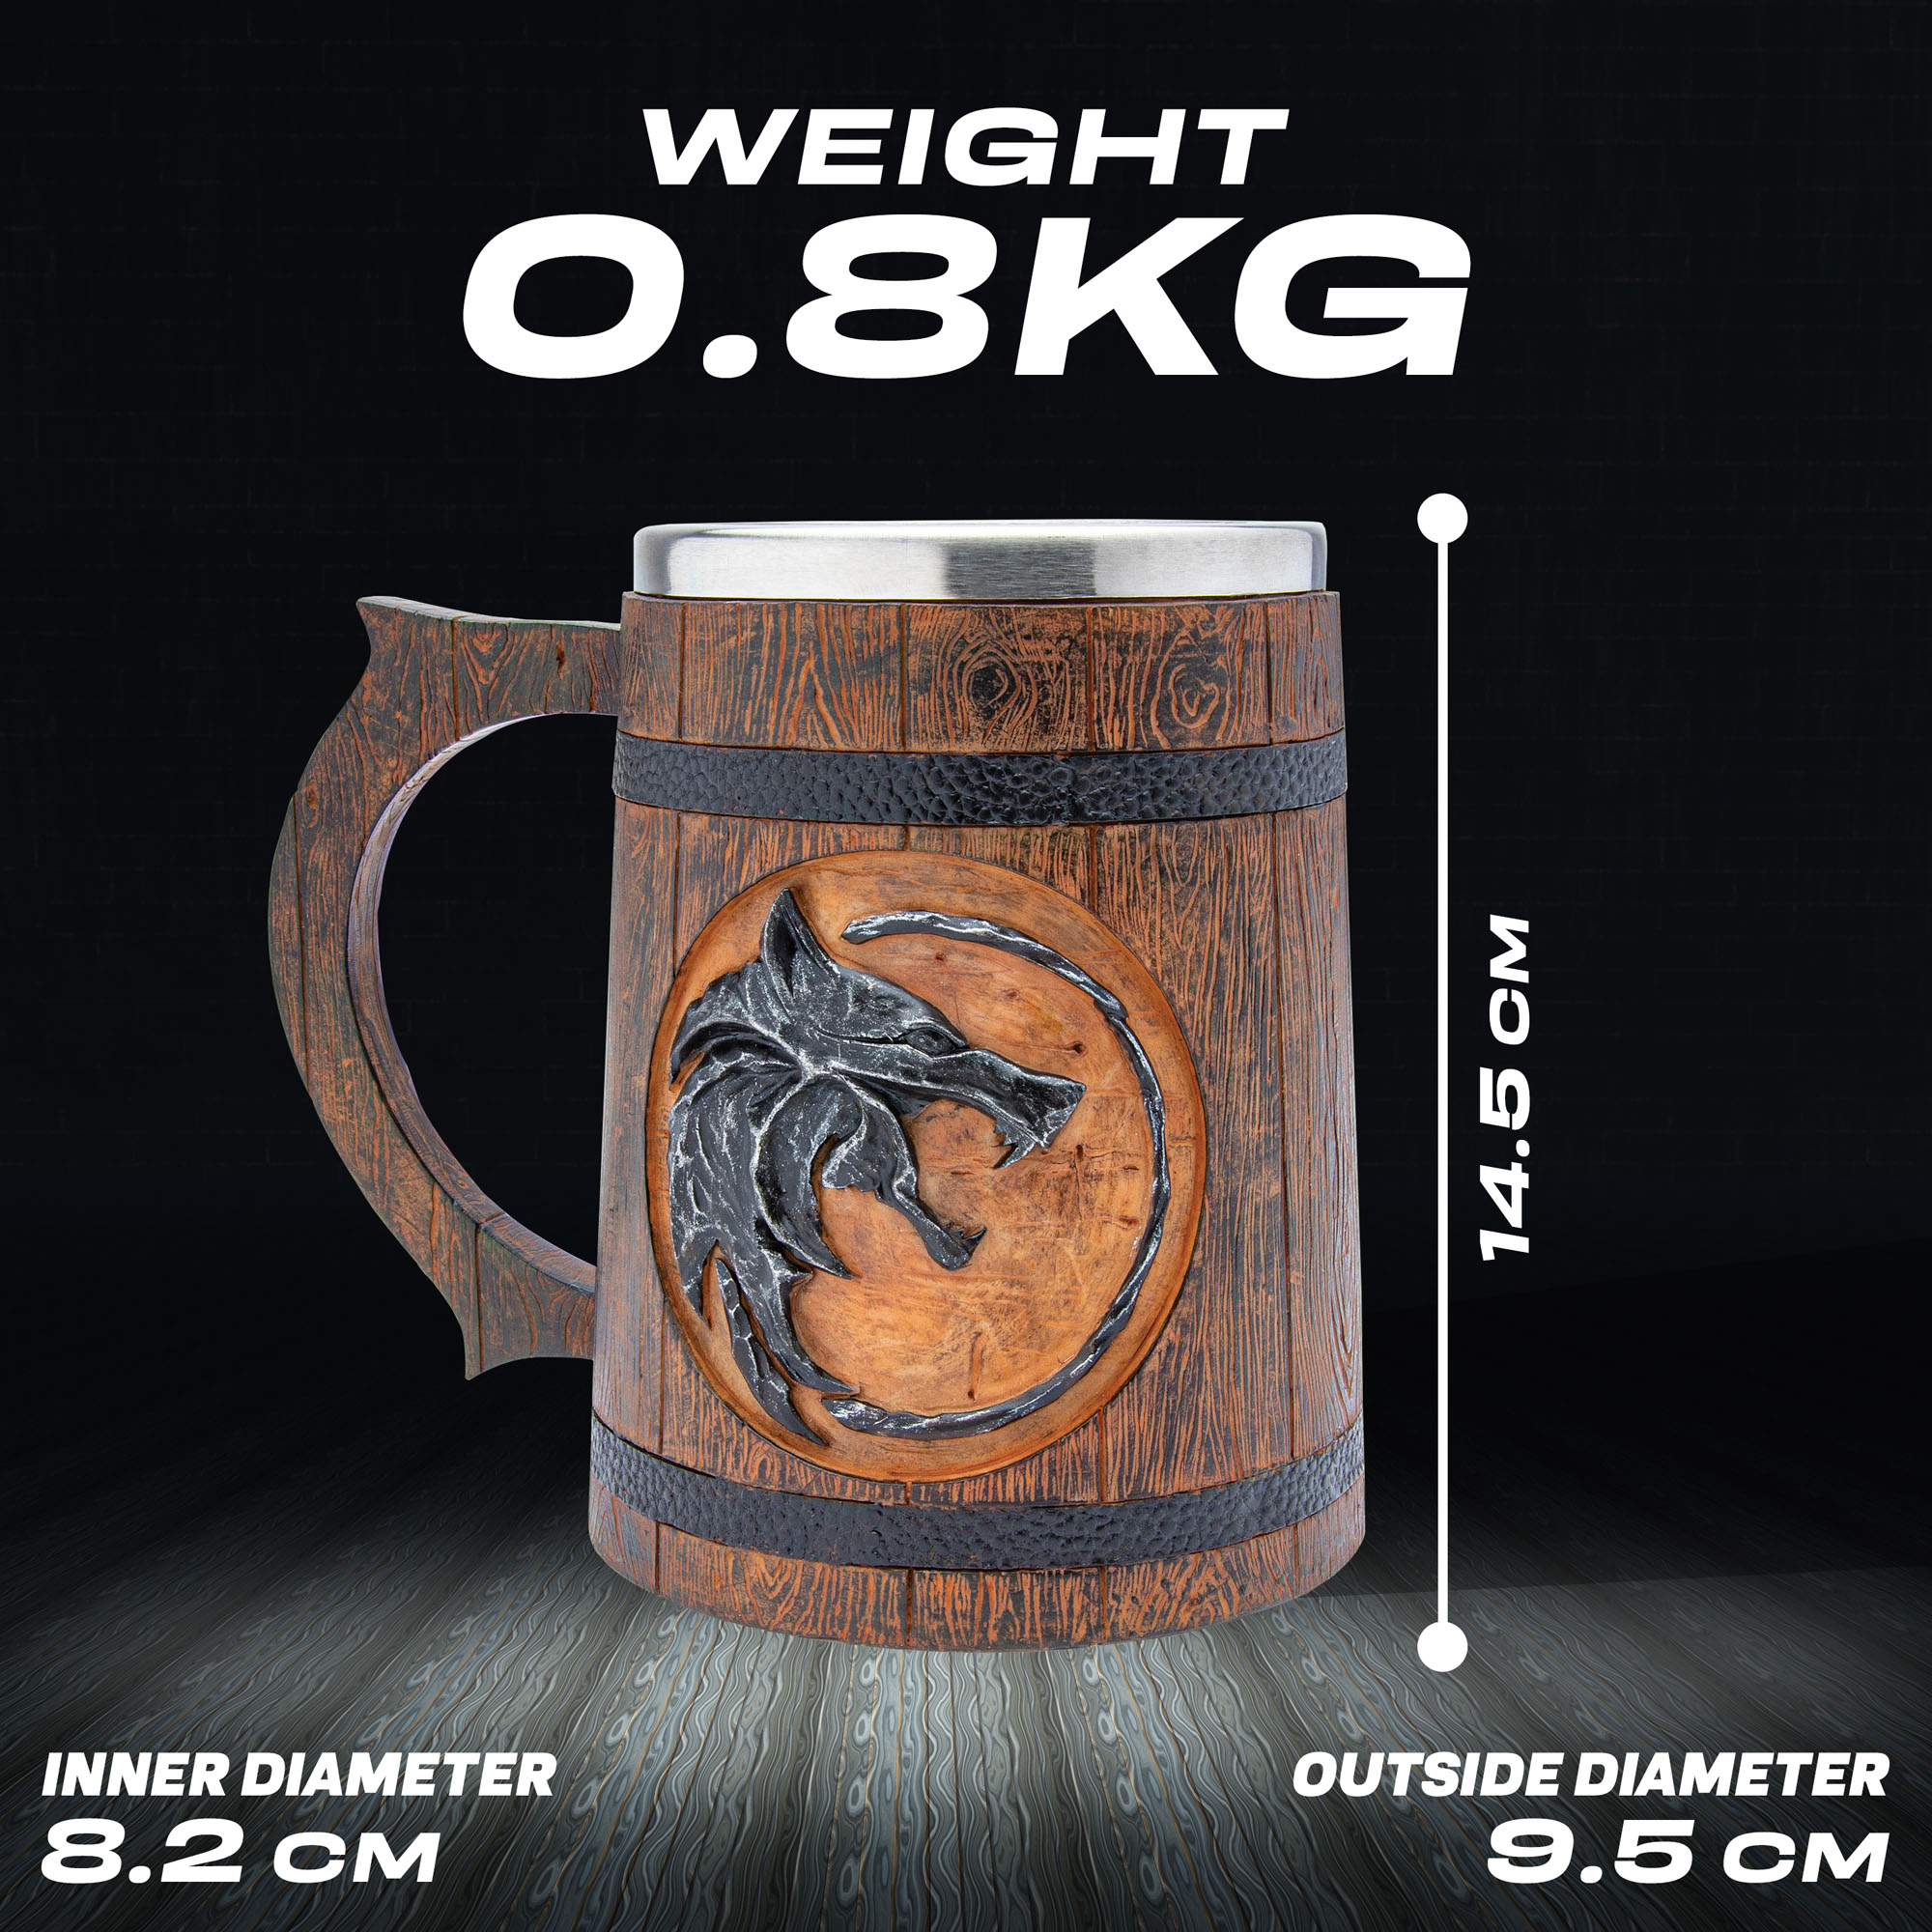 The Witcher - Geralt's Wolf Medallion Mug